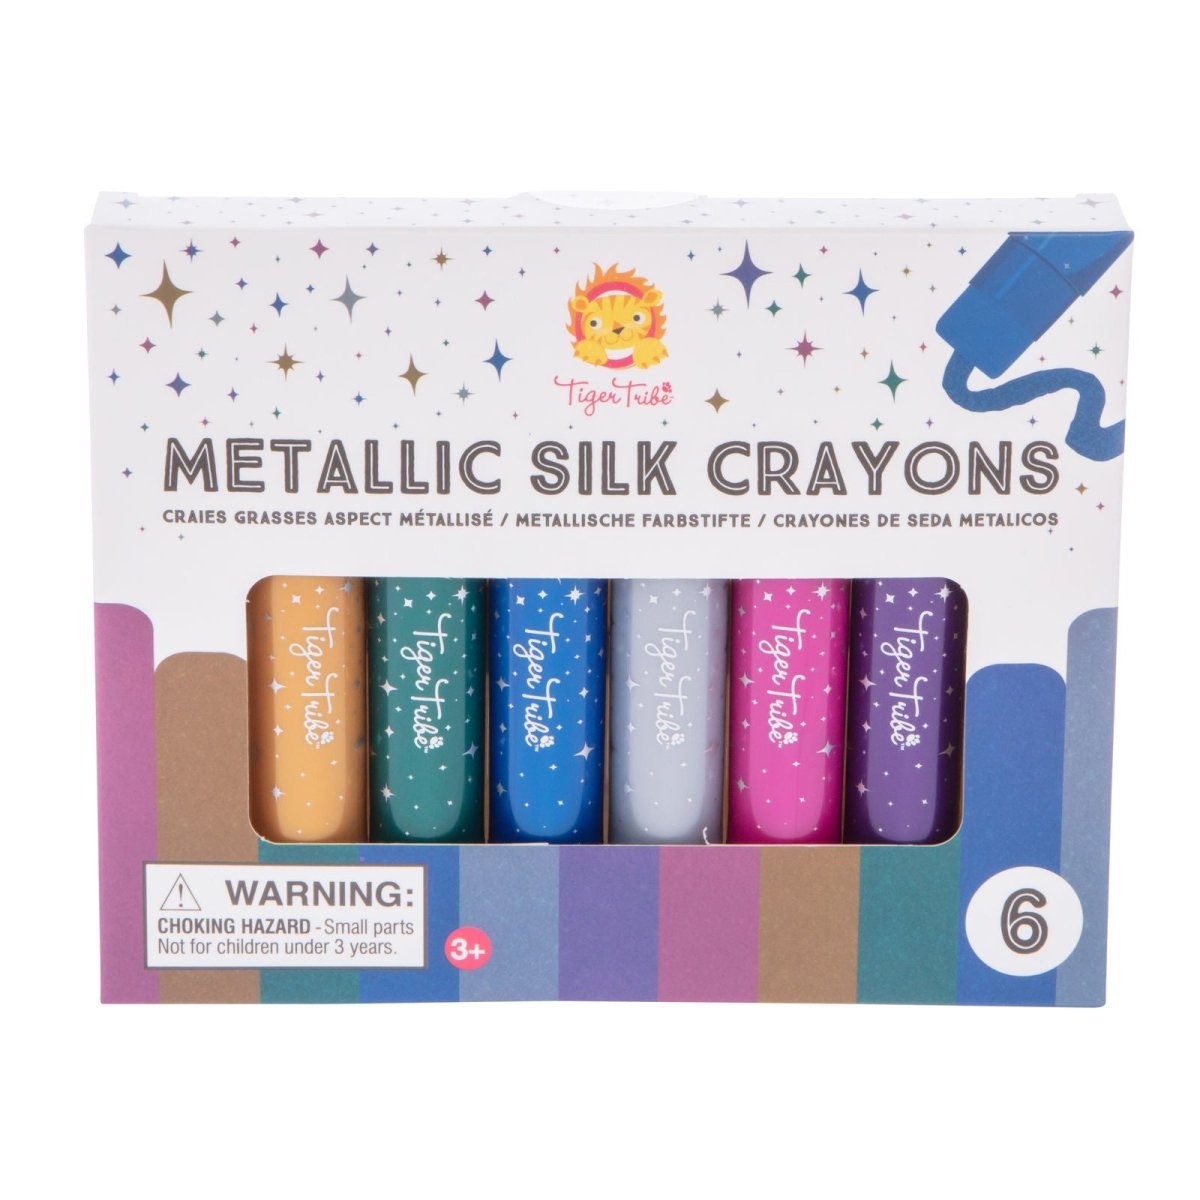 Metallic Silk Crayons - Mini Matisse